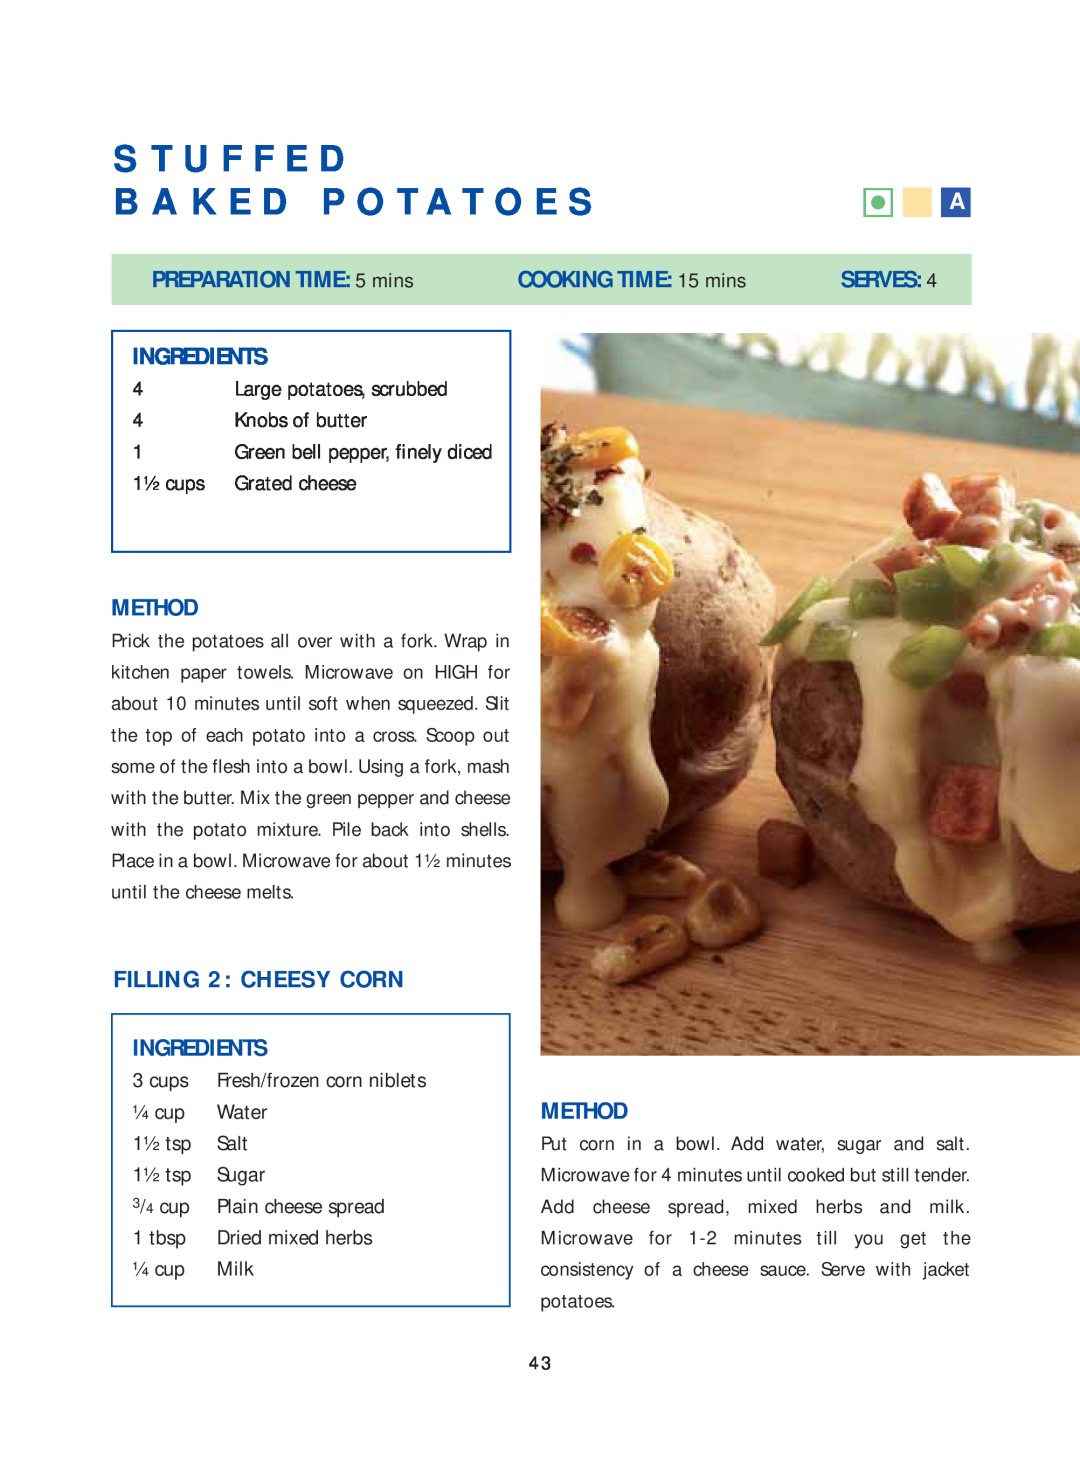 Samsung Microwave Oven warranty Stuffed Baked Potatoes, FILLING 2: CHEESY CORN 